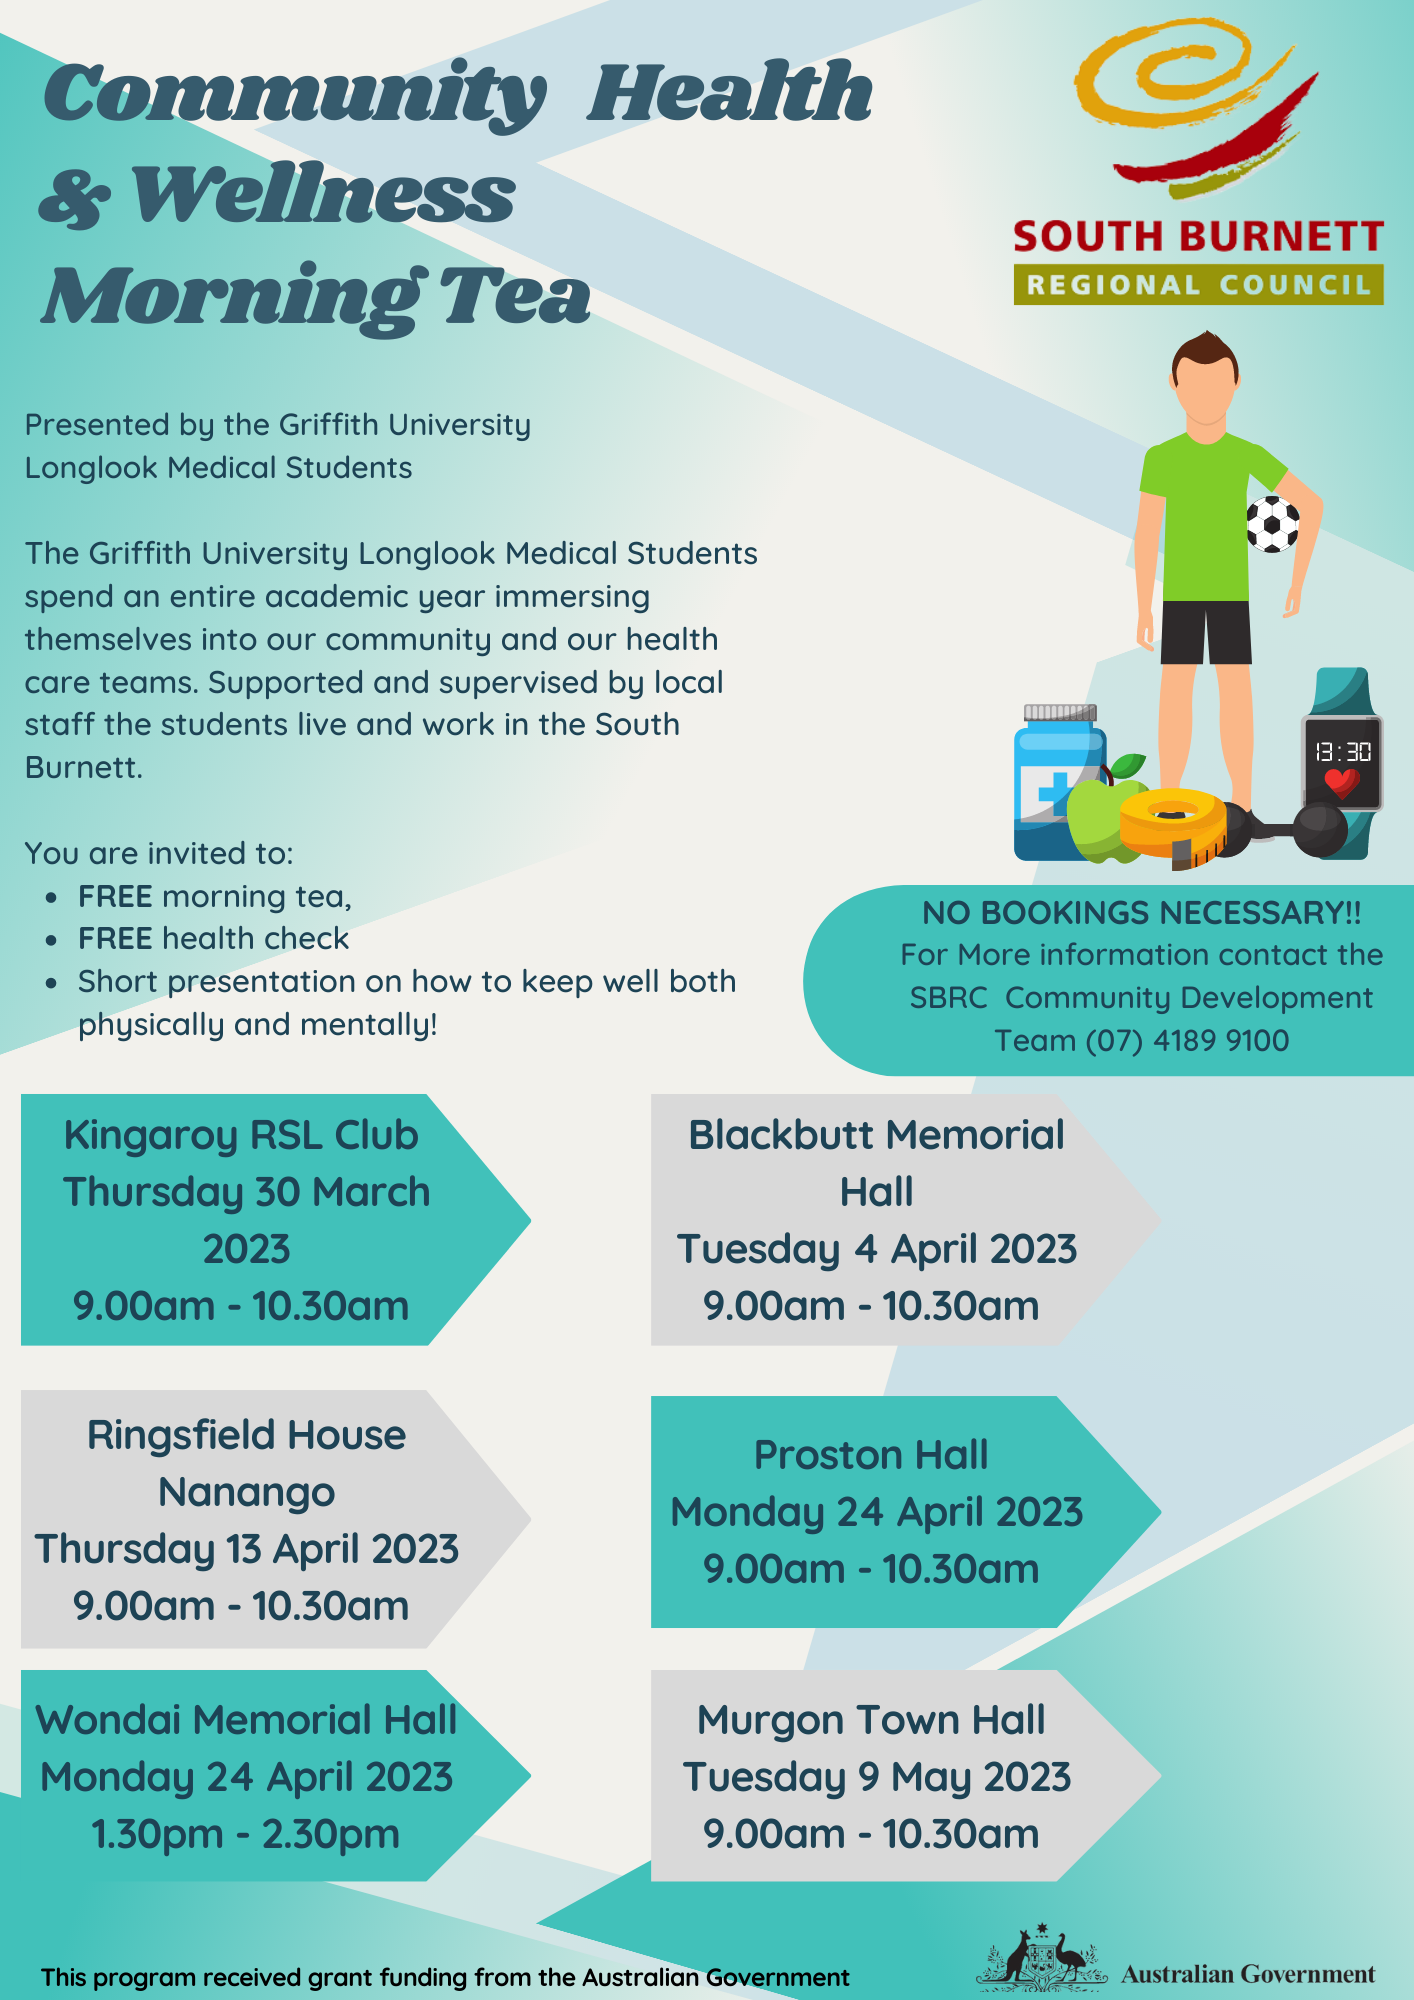 Community Health and Wellness Morning Tea